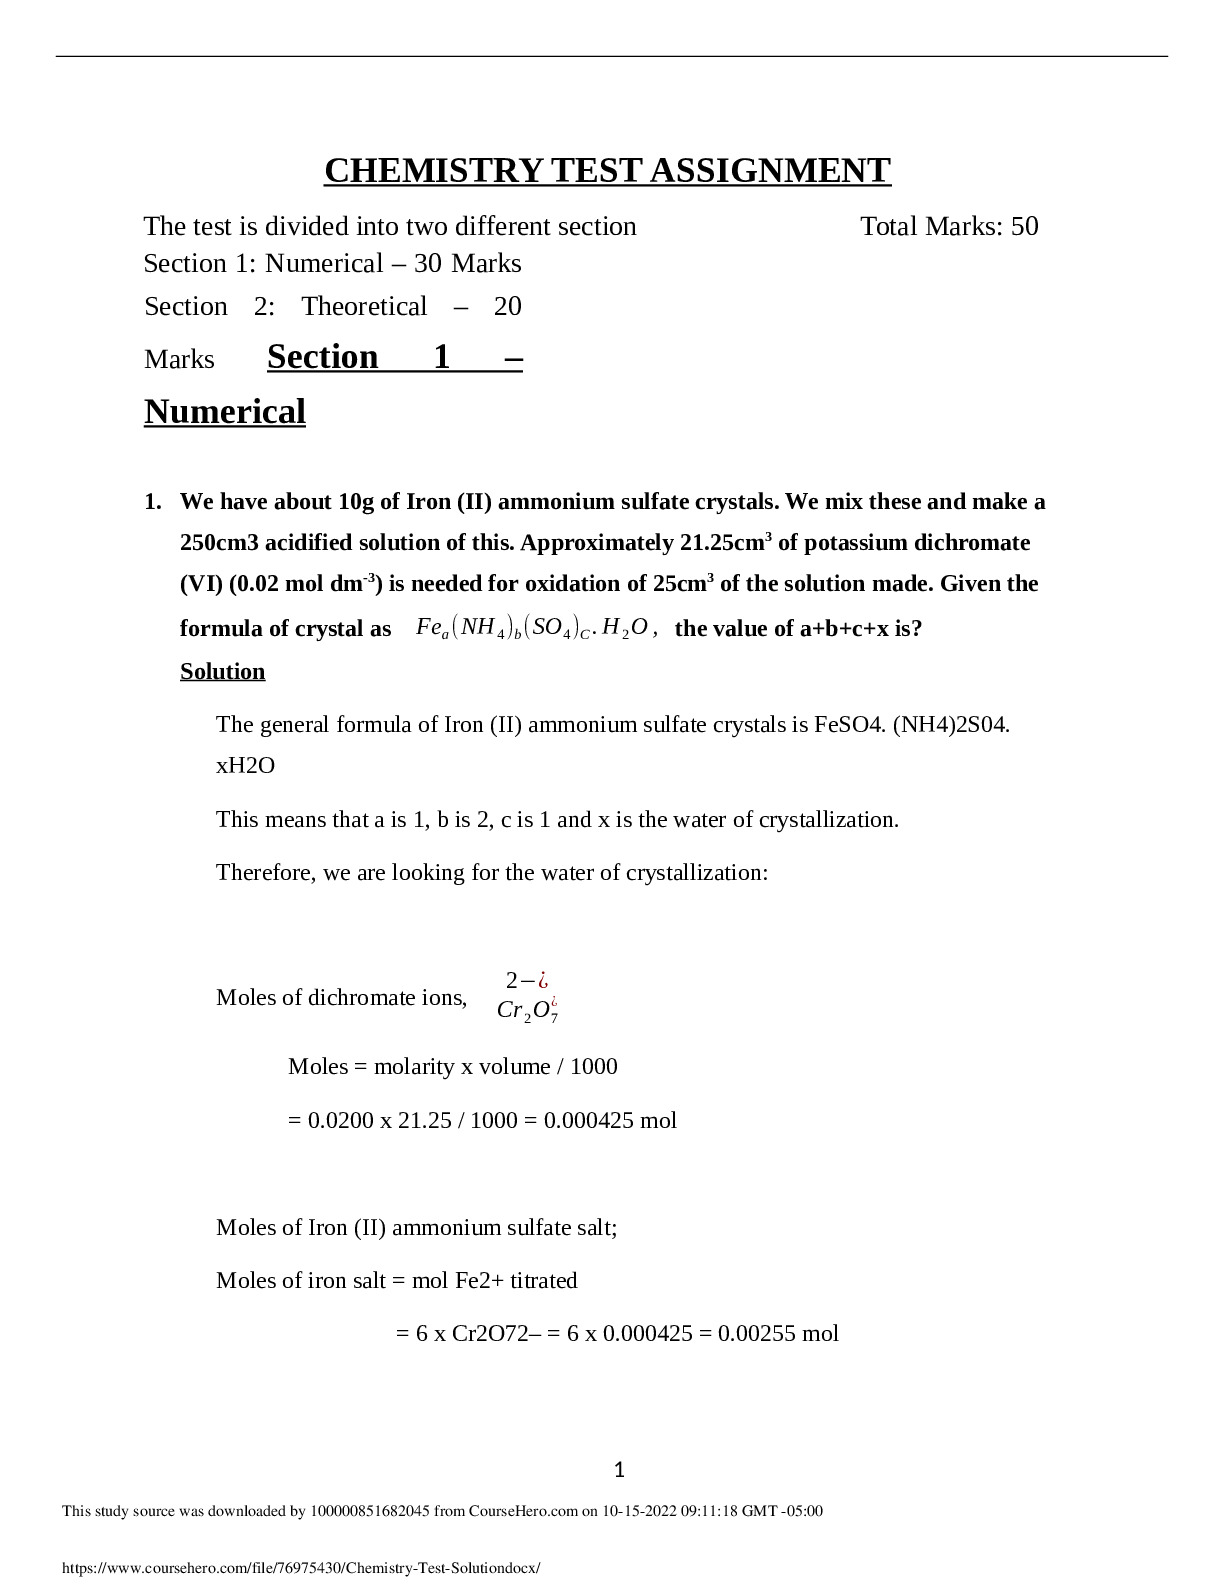 Chemistry_Test_Solution.docx